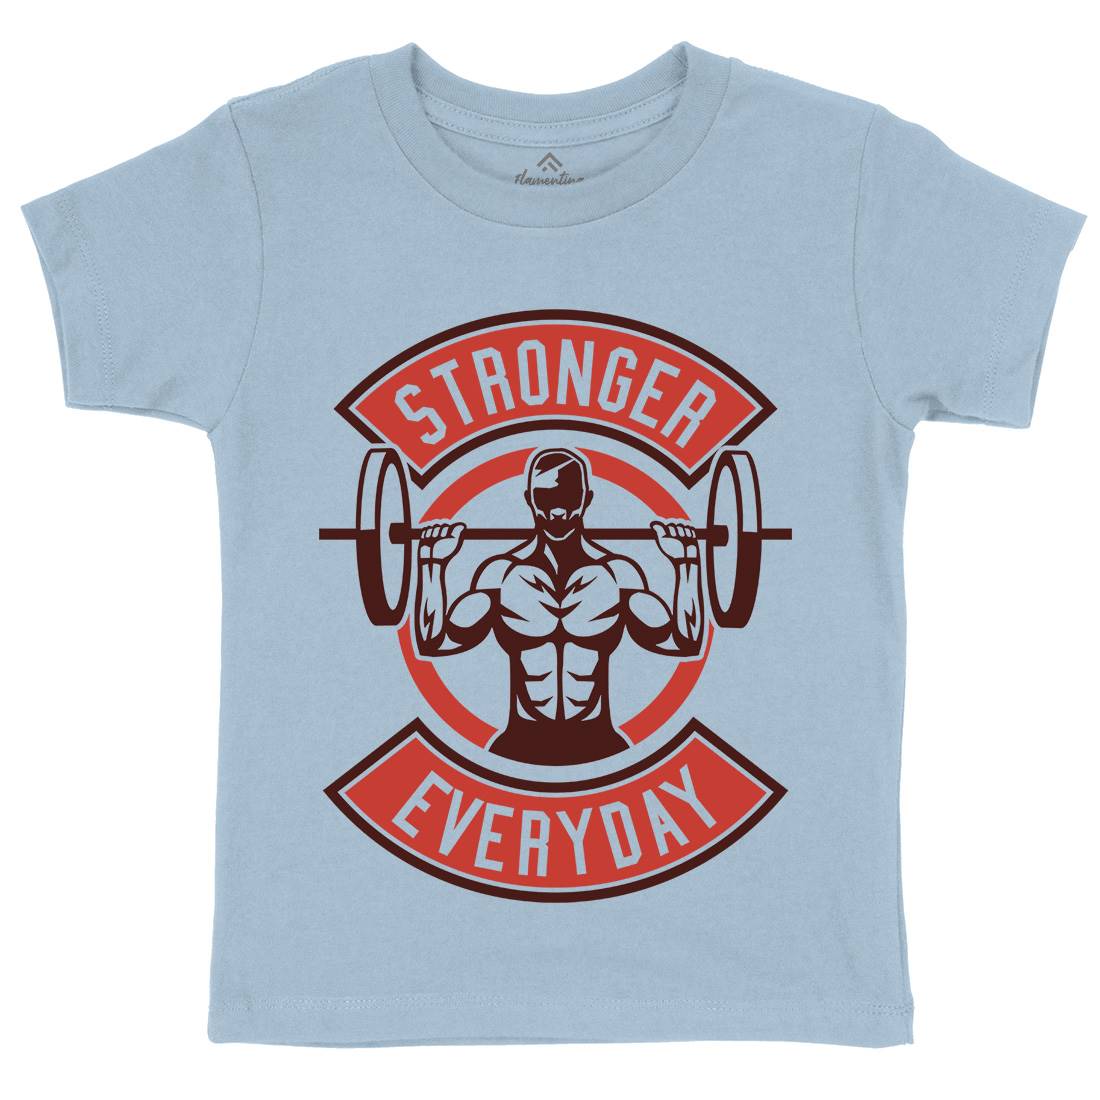 Stronger Everyday Kids Organic Crew Neck T-Shirt Gym A289